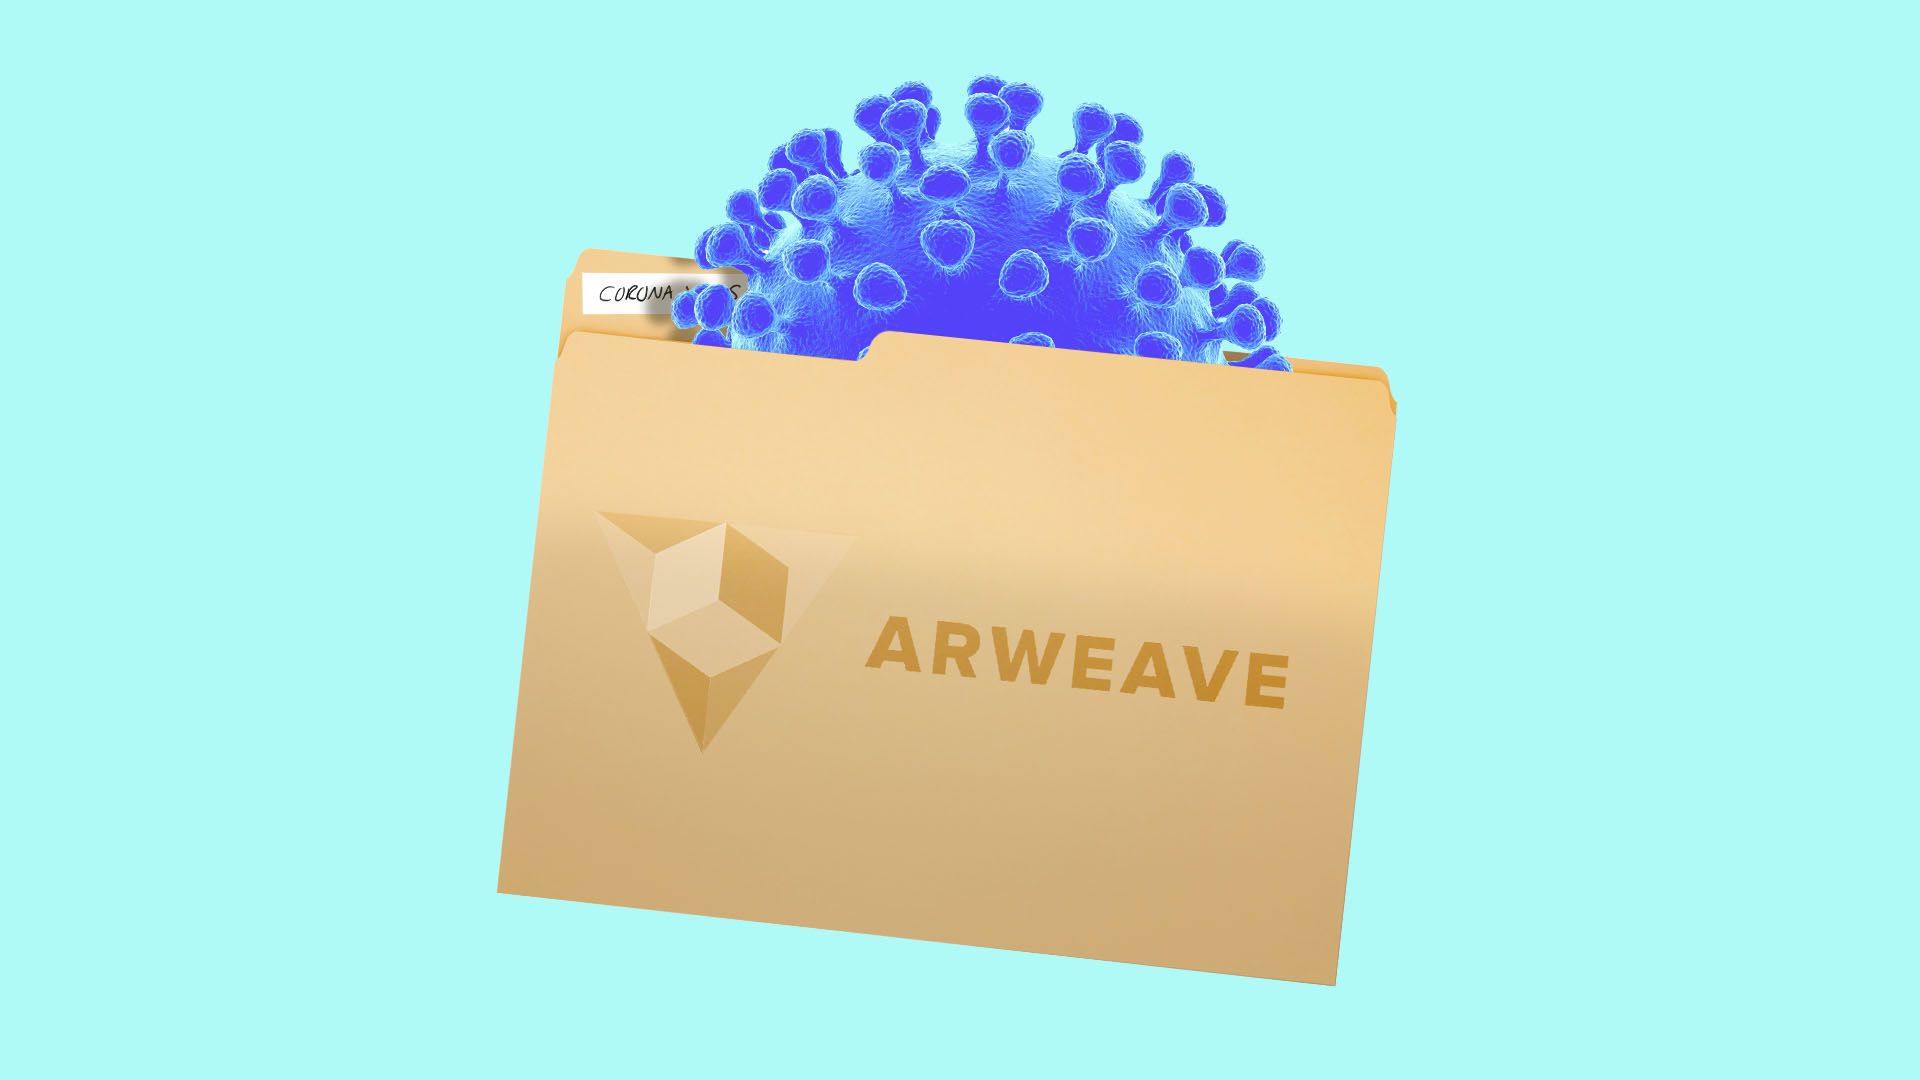 Illustration of virus within a folder labeled "Arweave."